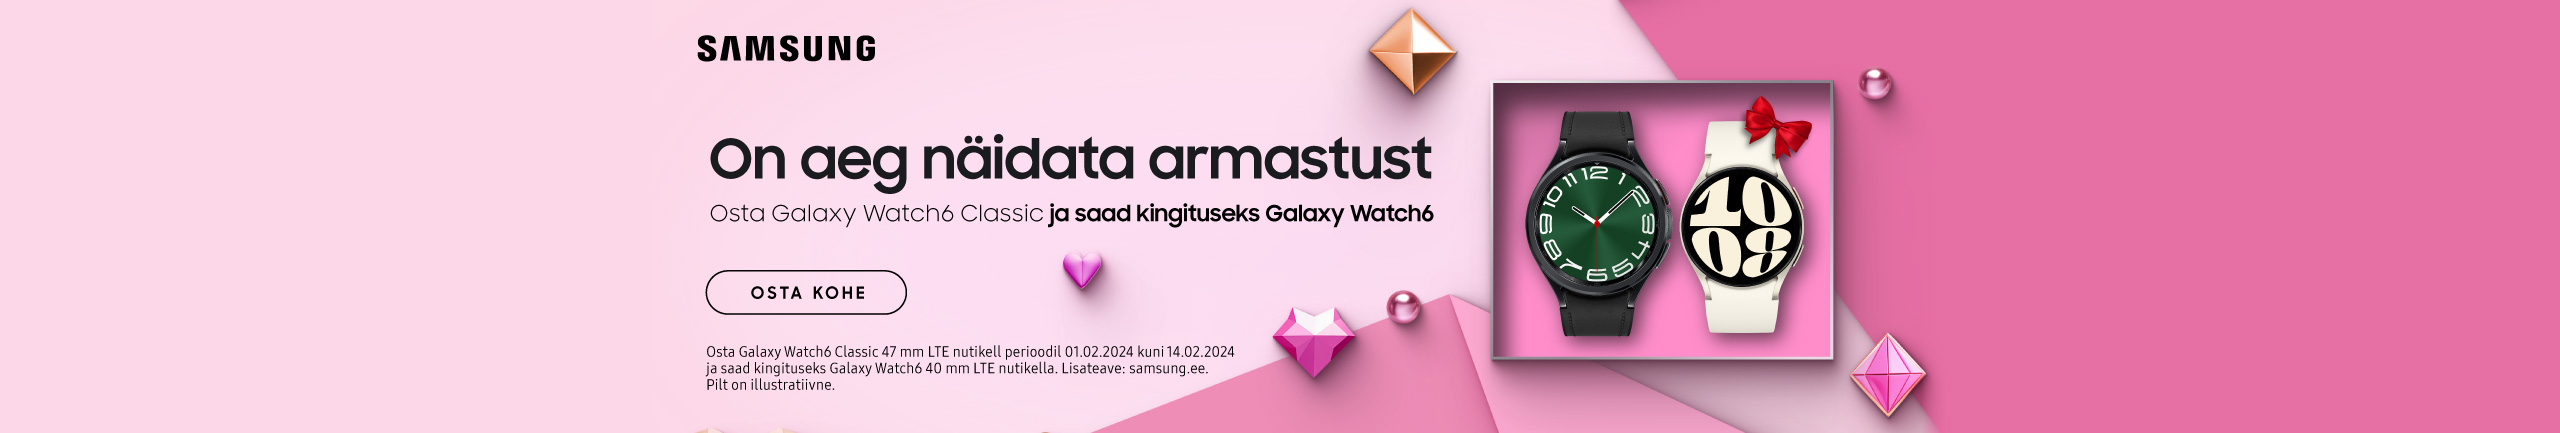 Samsung Galaxy Watch 6 Classic nutikellaga Watch 6 kingituseks!